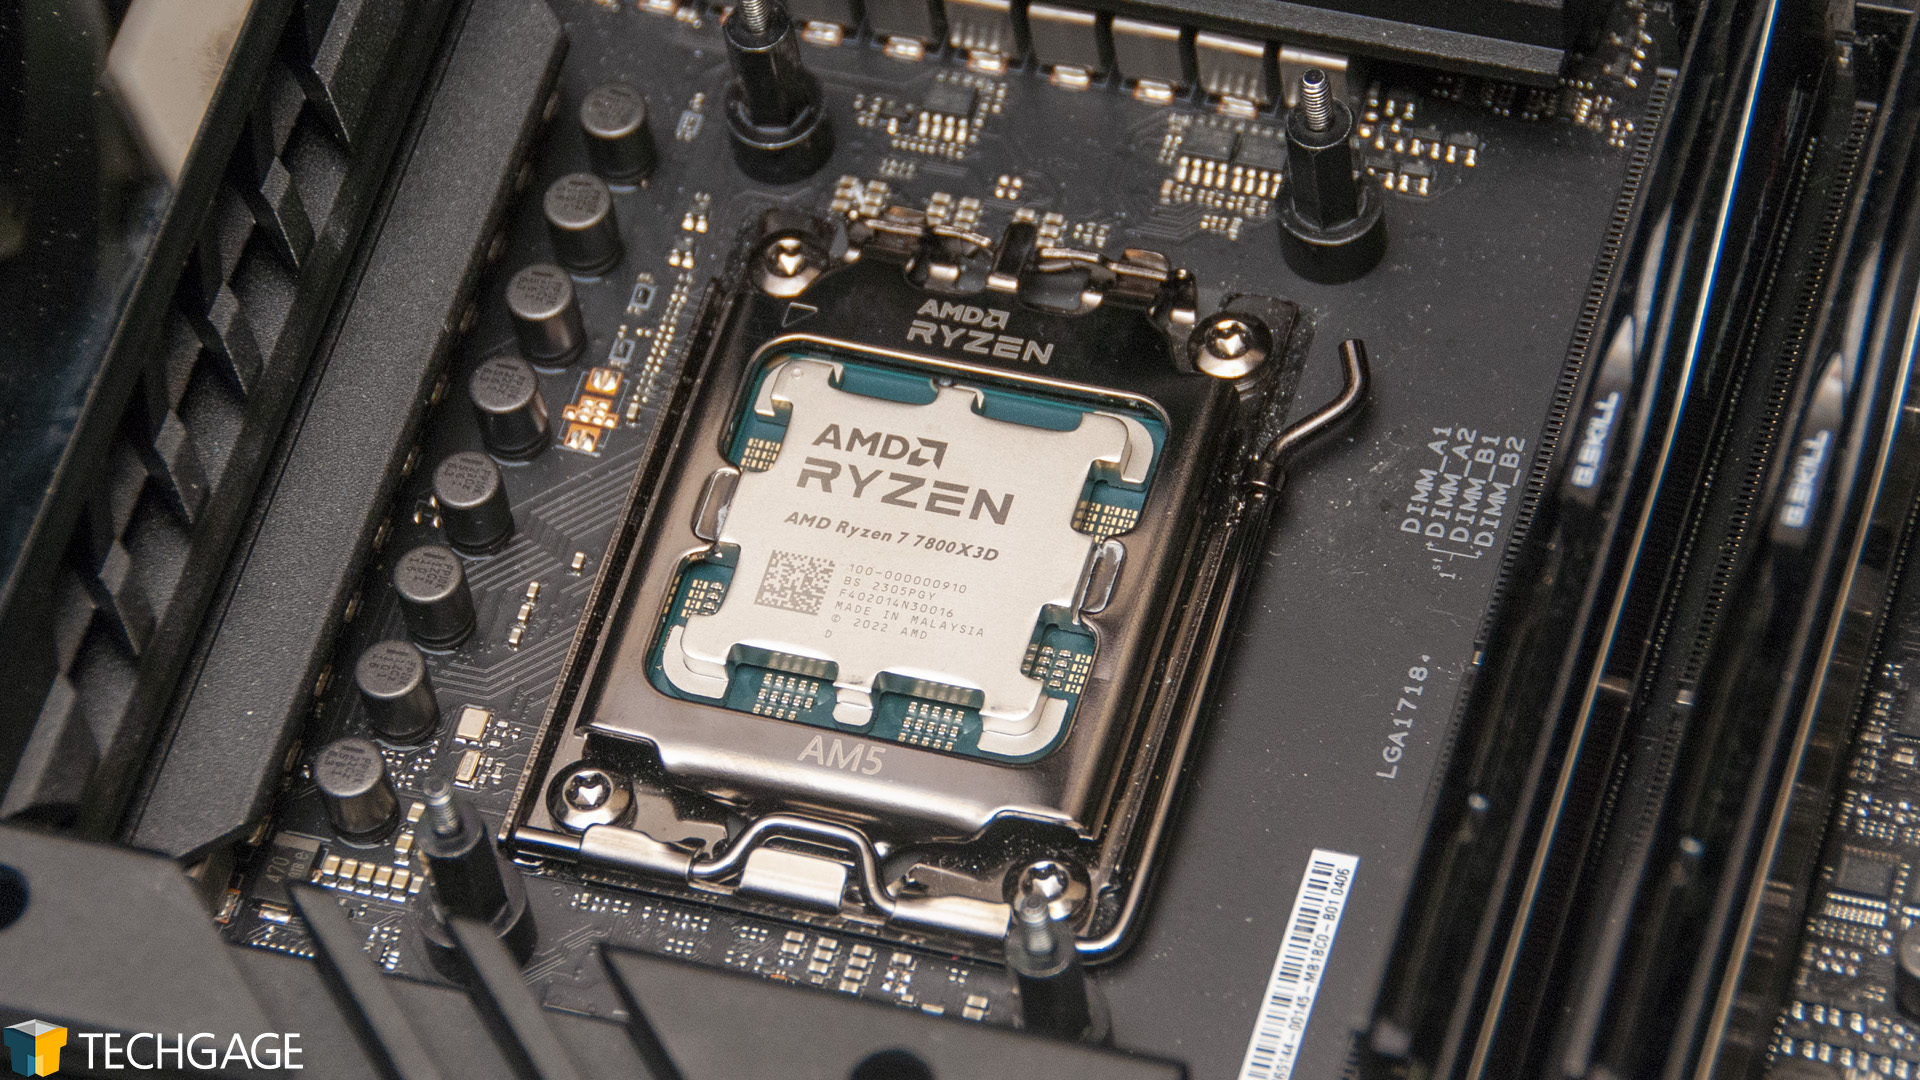 AMD Ryzen 7 7800X3D Installed